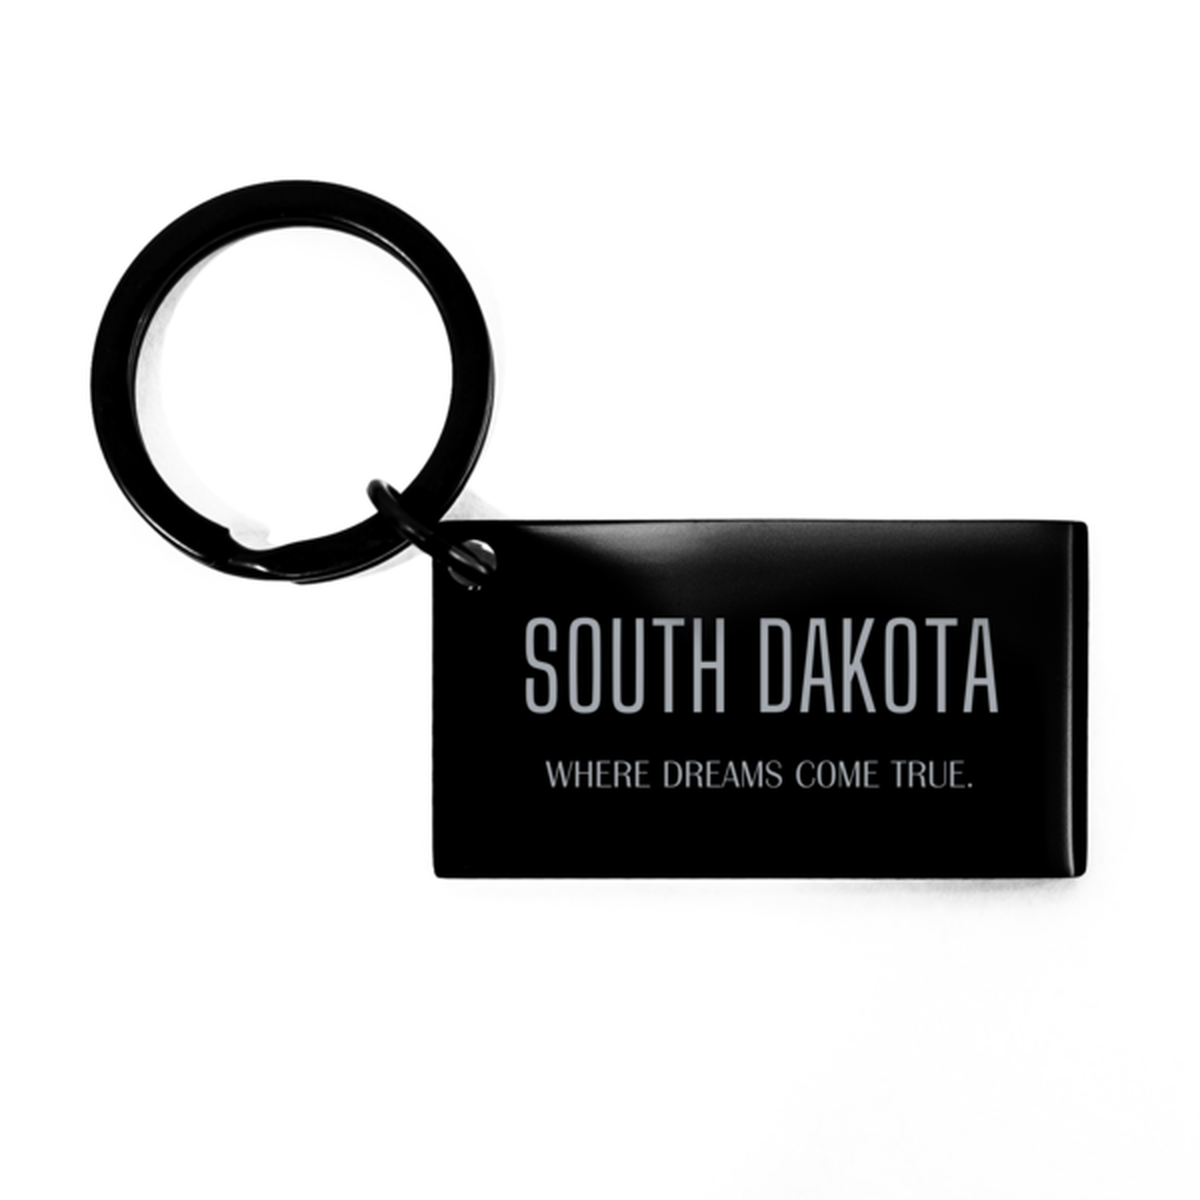 Love South Dakota State Keychain, South Dakota Where dreams come true, Birthday Inspirational Gifts For South Dakota Men, Women, Friends